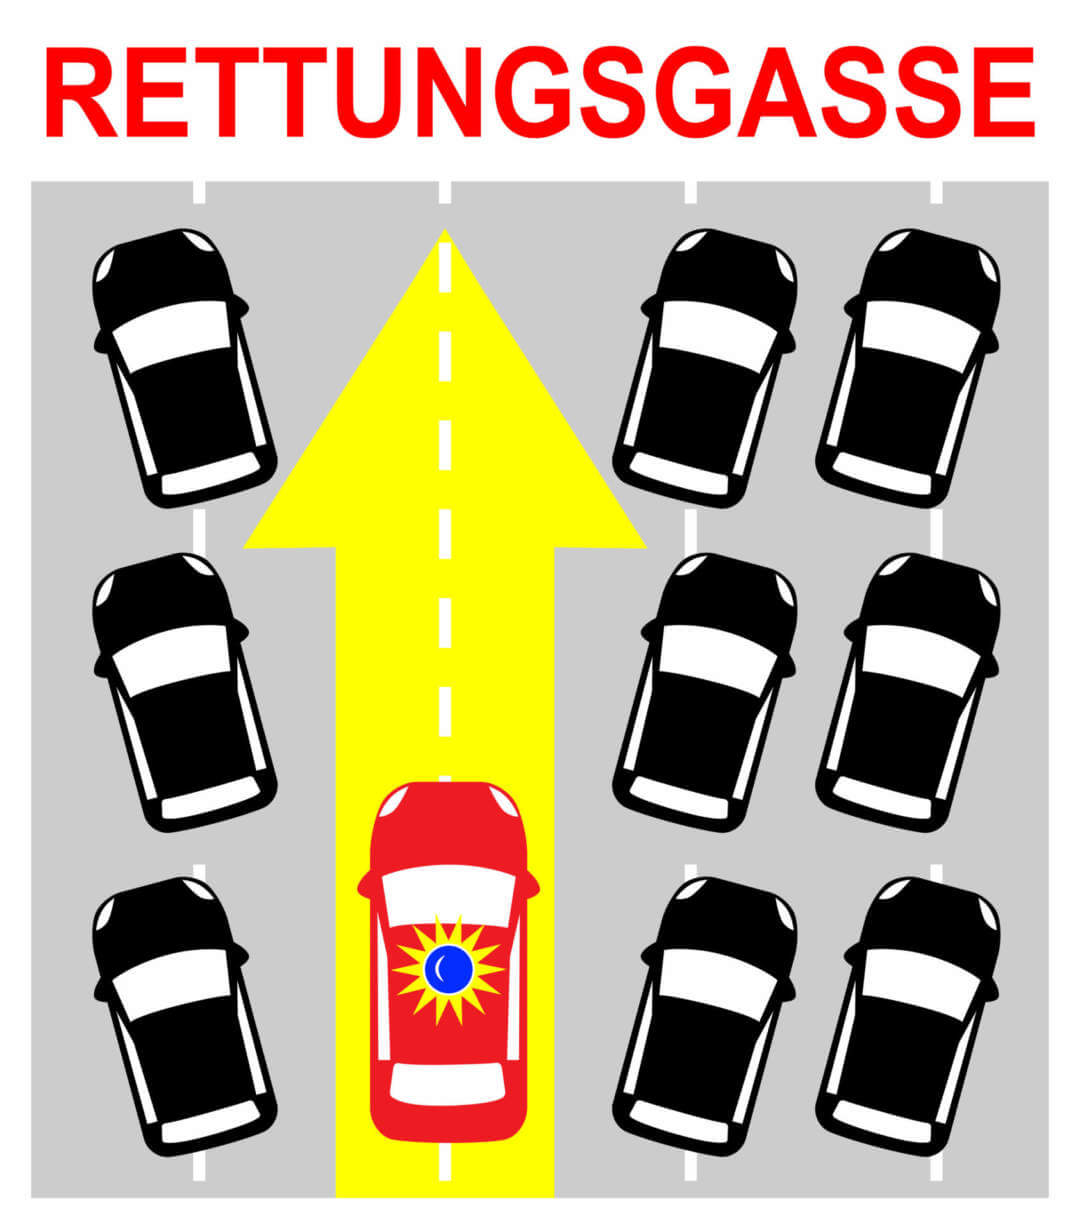 Rettungsgasse - Illustration